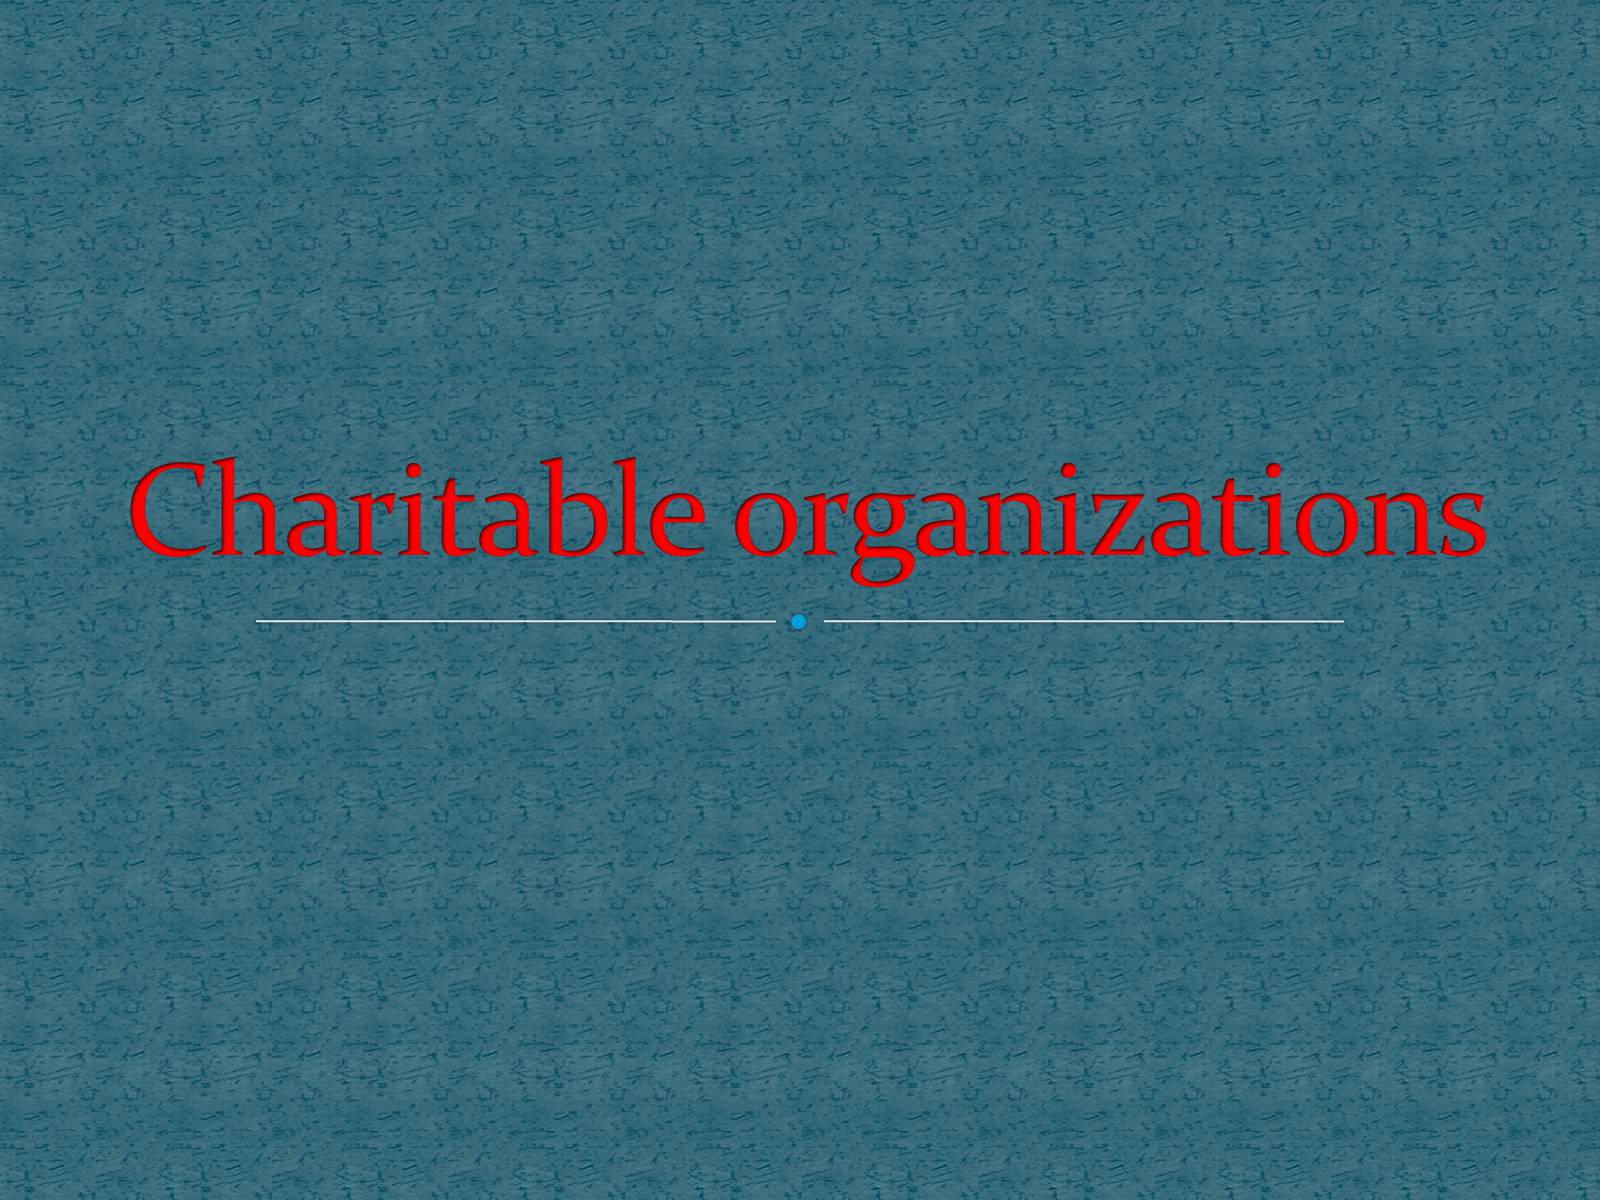 Презентація на тему «Charitable organizations» - Слайд #1